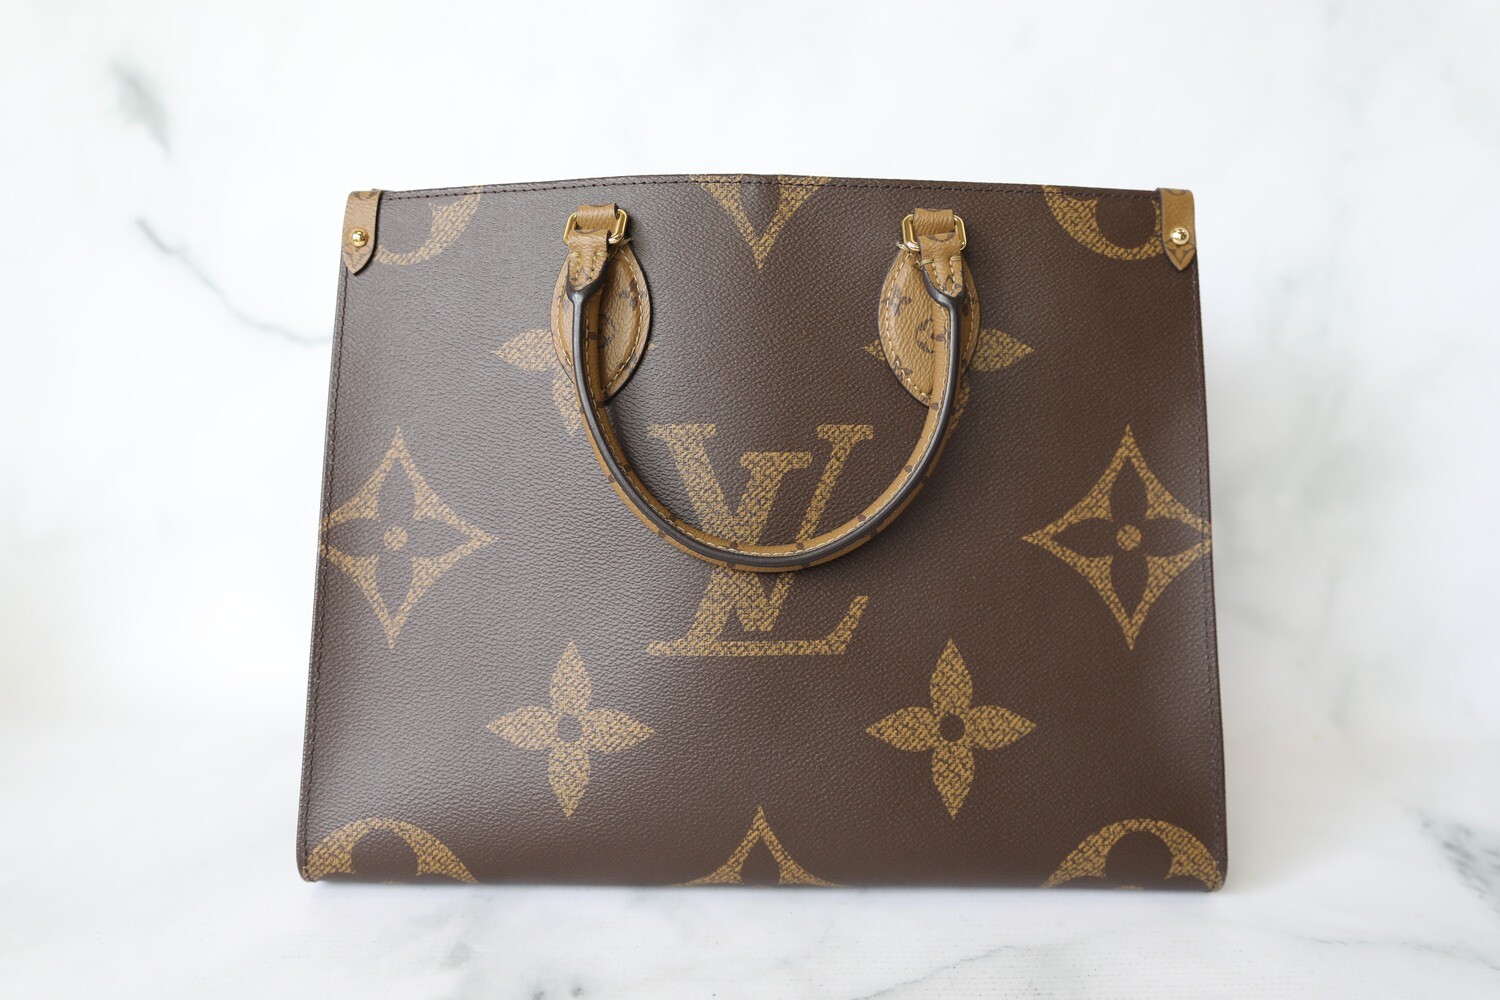 Louis Vuitton Re-Releases the Odéon Bag